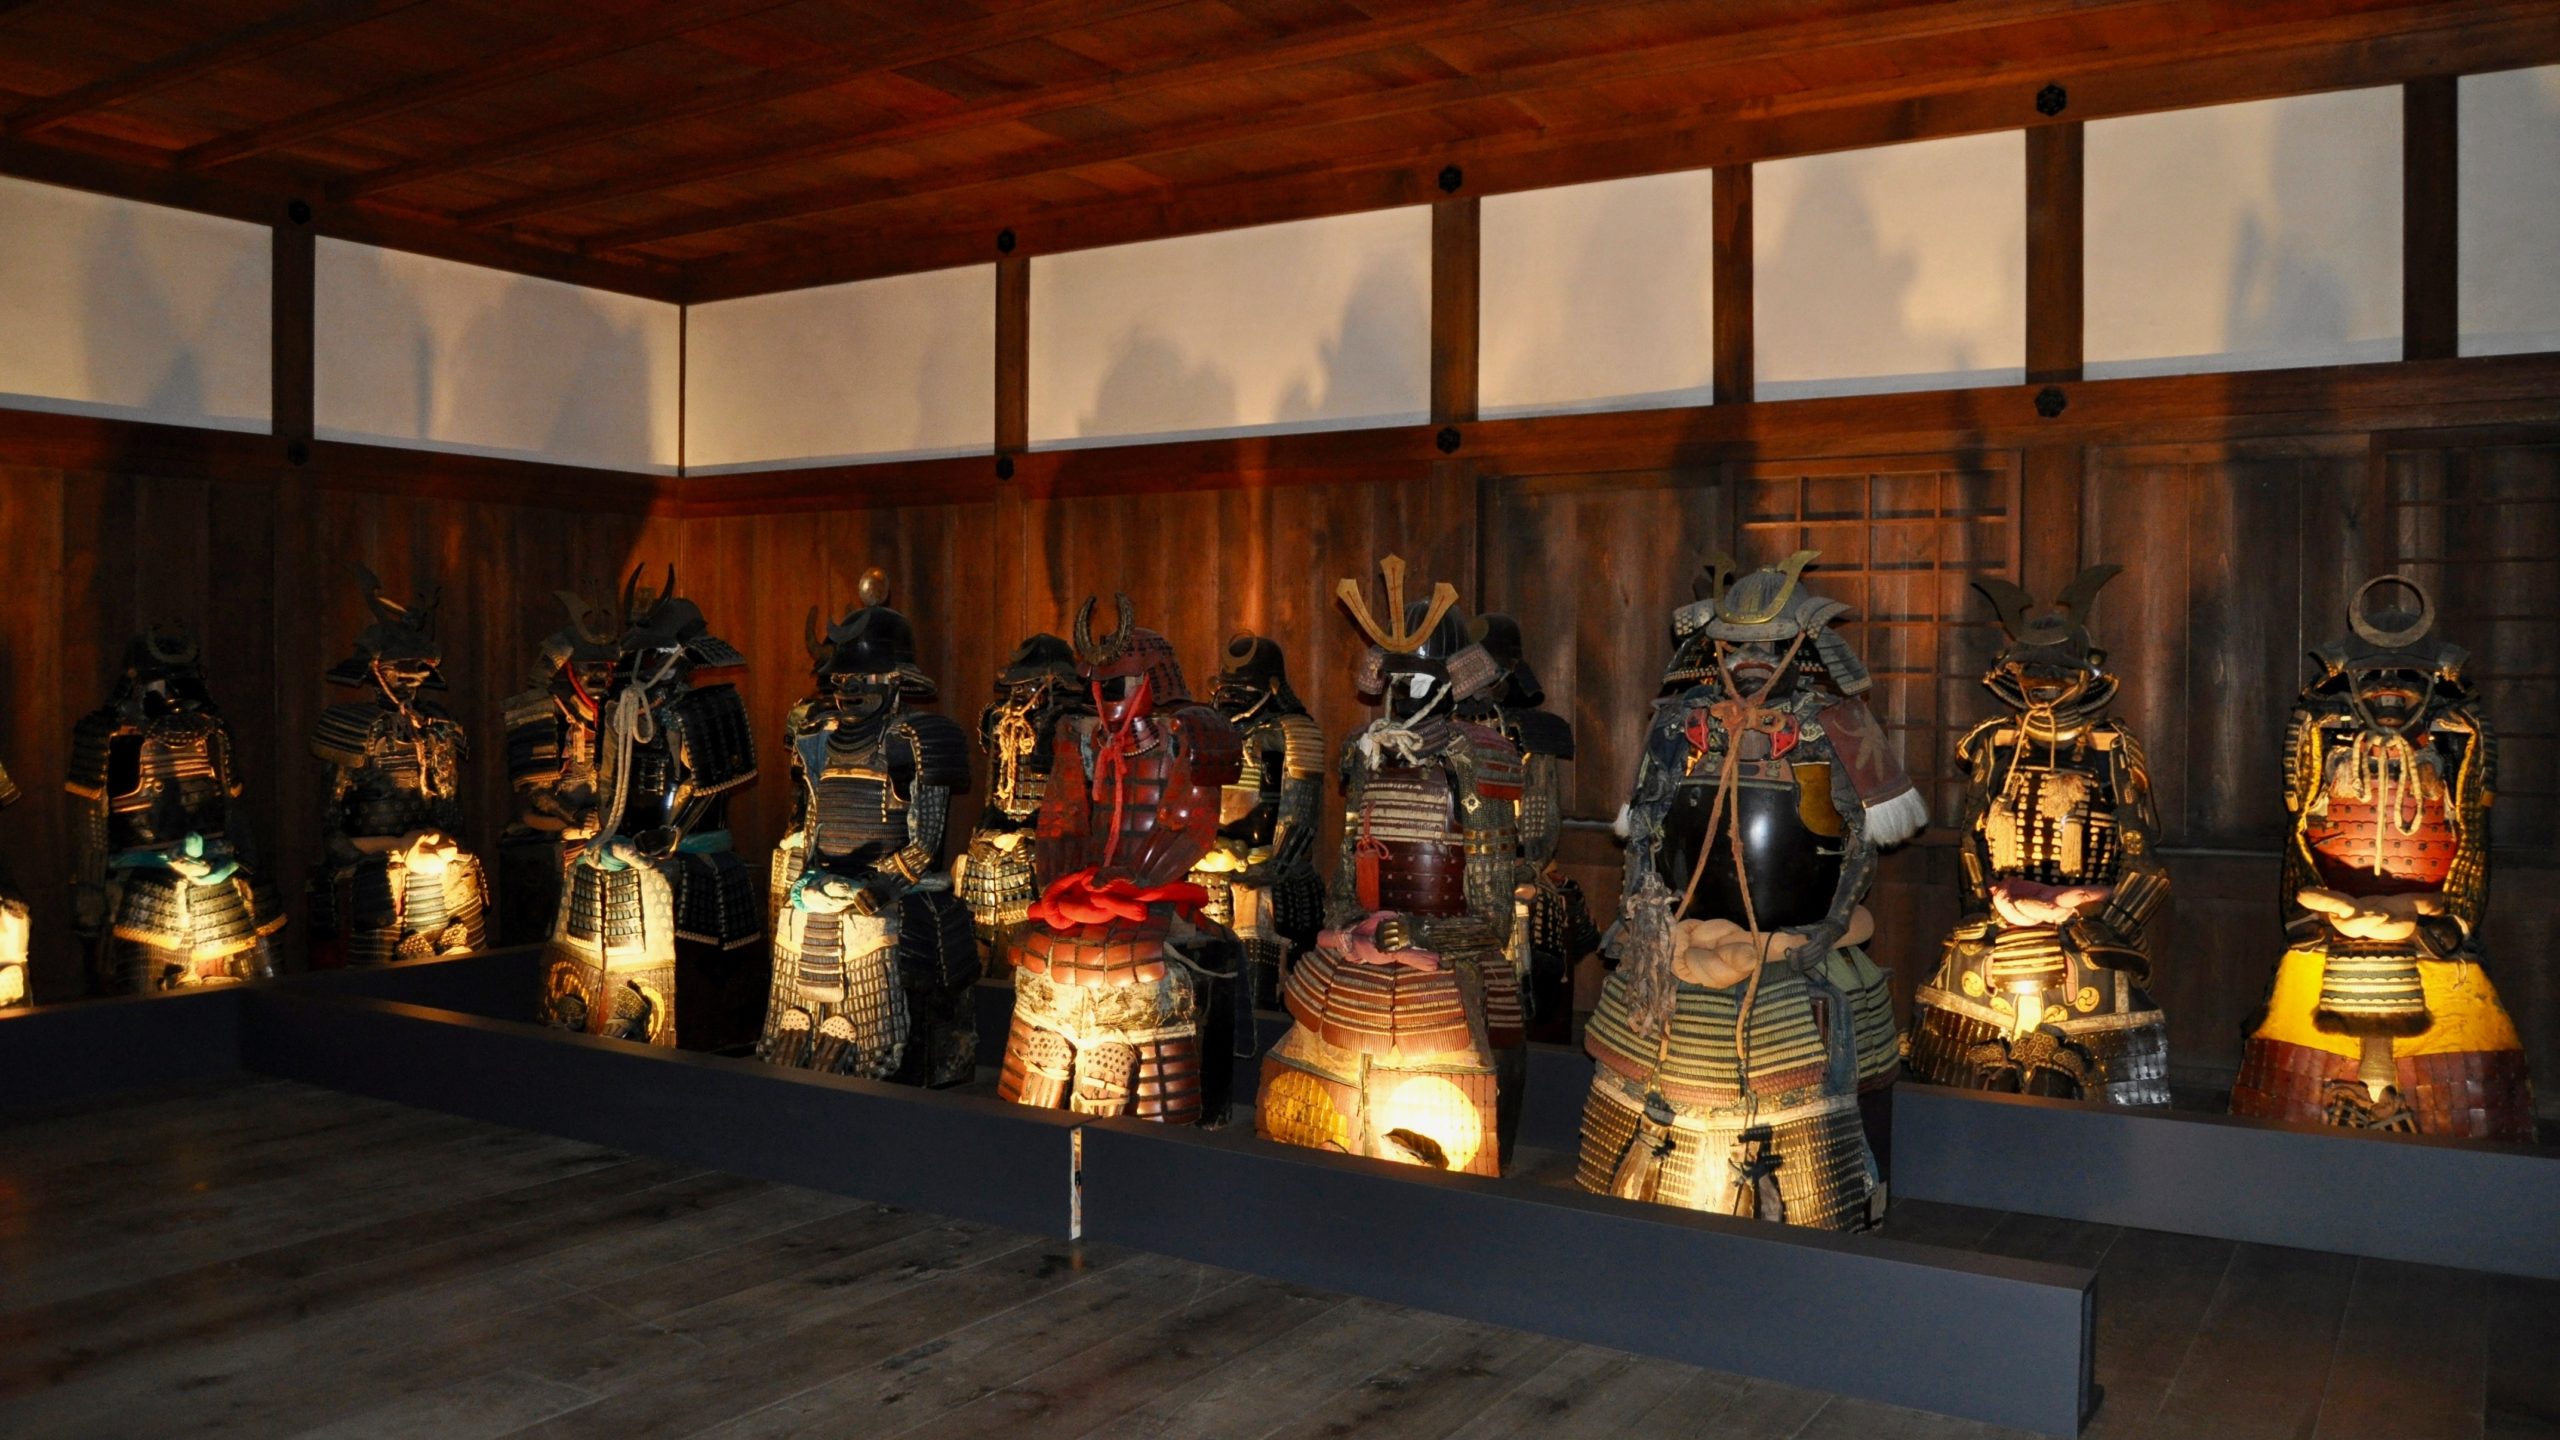 armor displayed at Himeji Castle